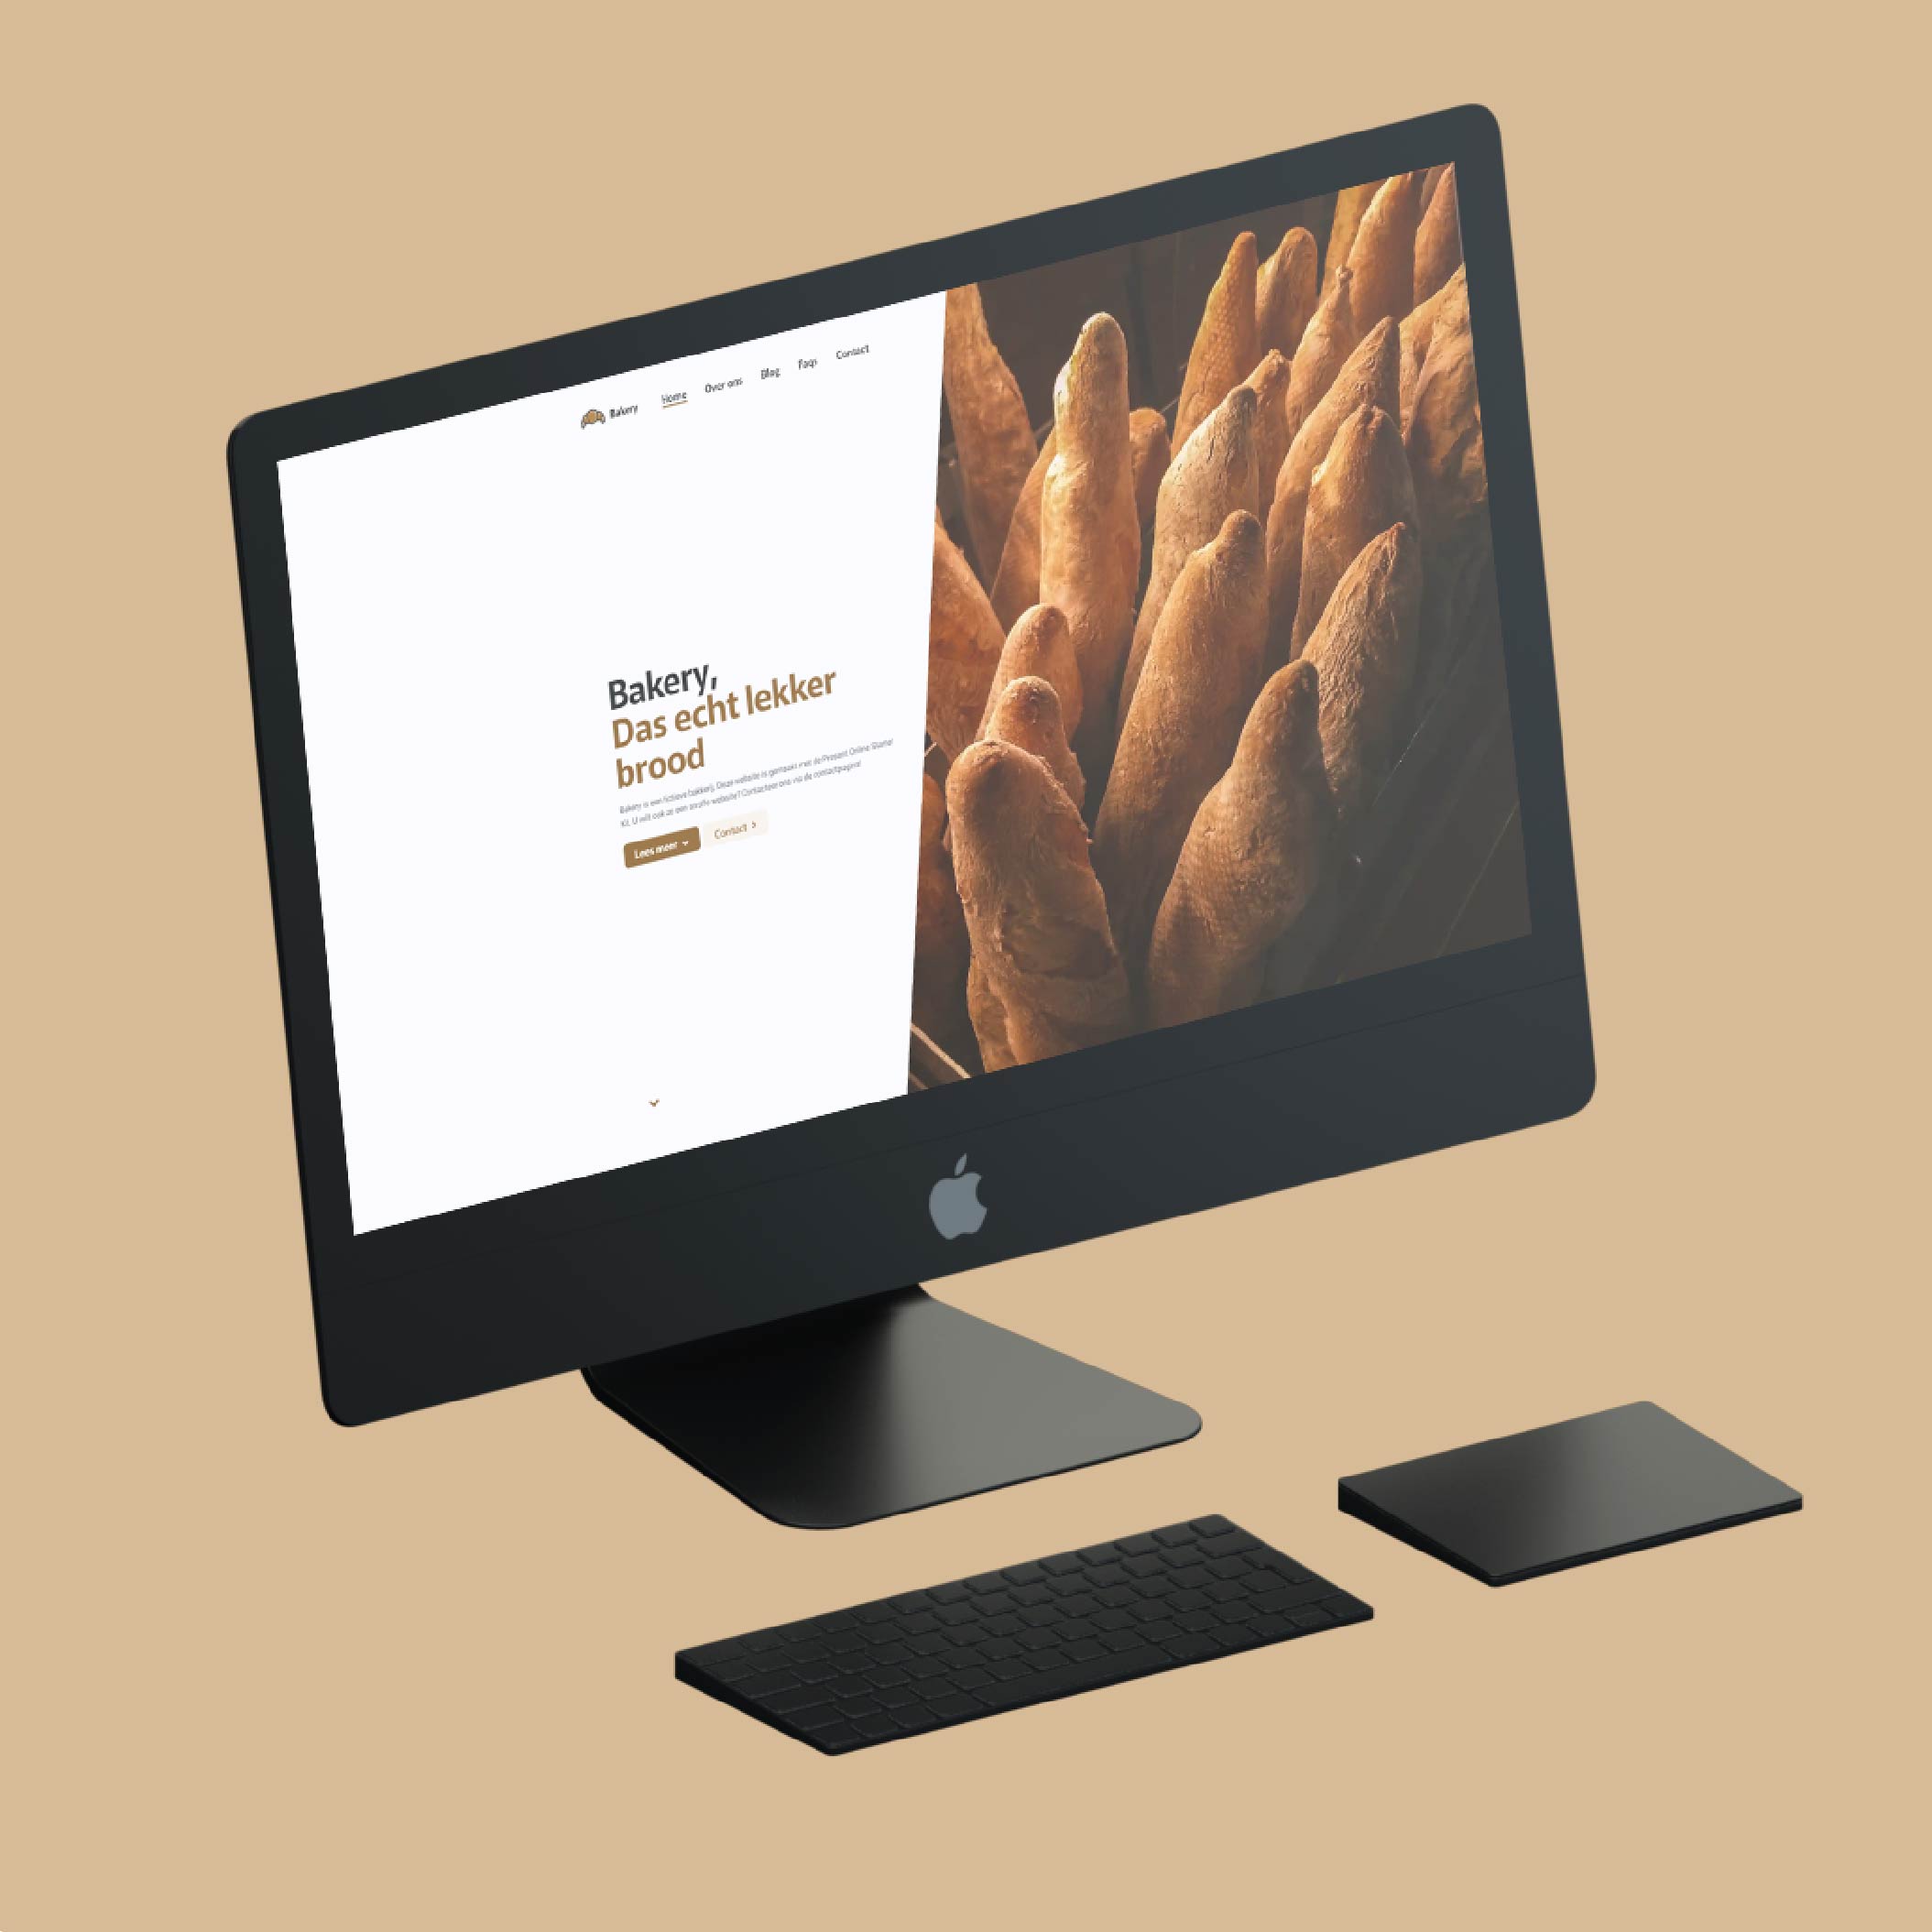 Present Online project Bakery mockup Mac enkel